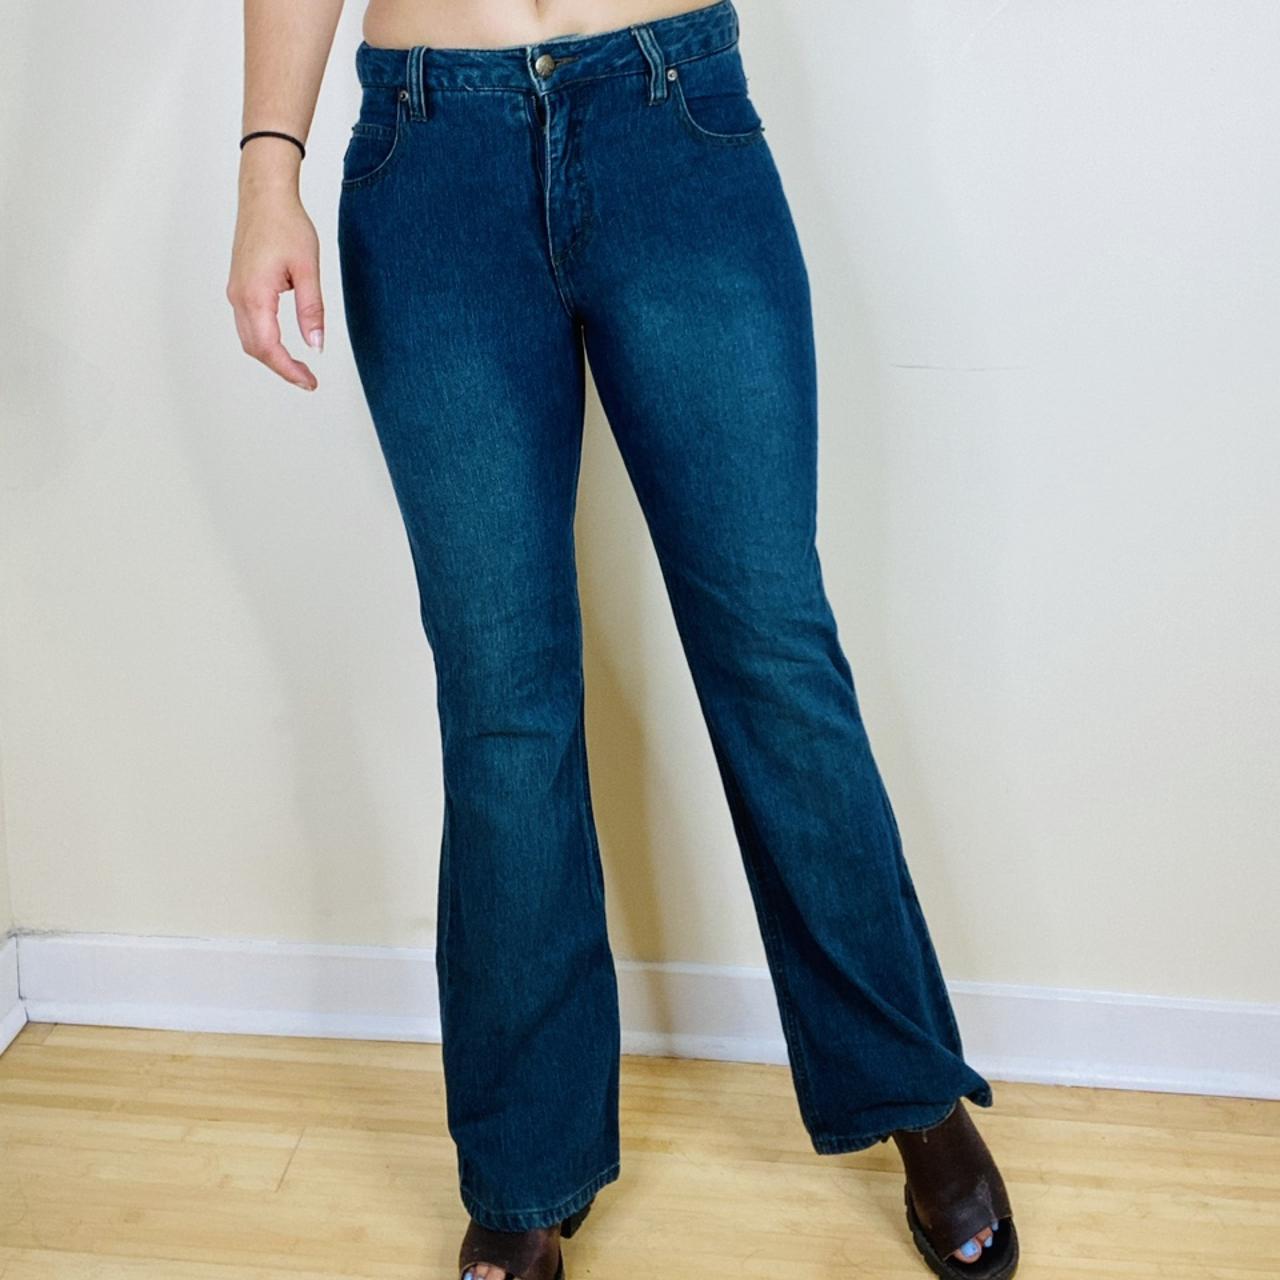 Vintage 90s 2000s Mudd kick flare denim jeans. These... - Depop